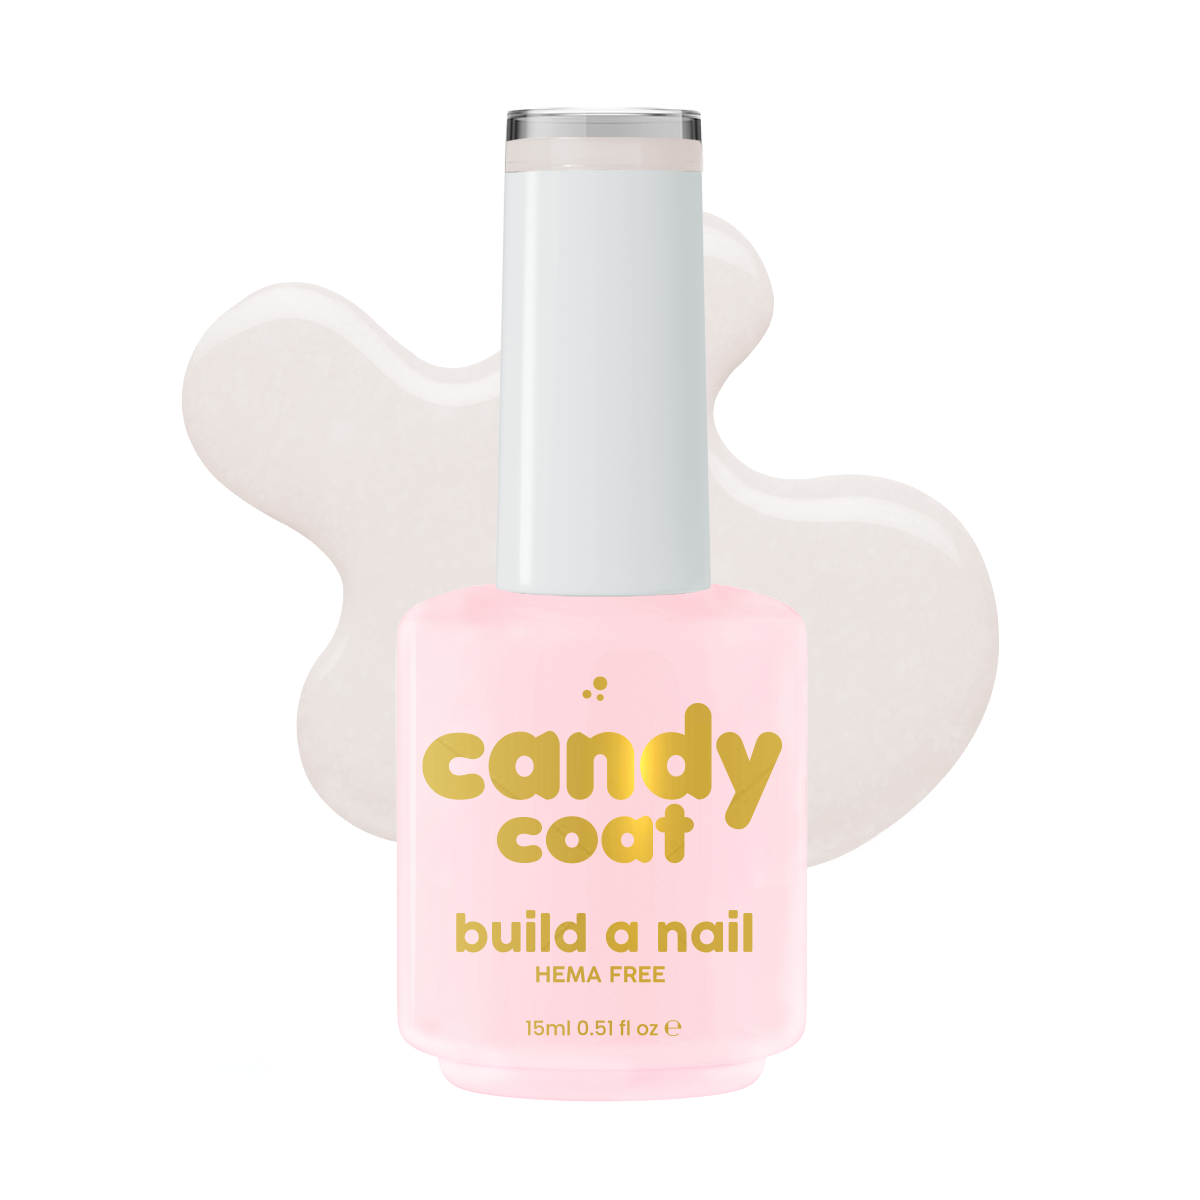 Candy Coat - HEMA Free Build-a-Nail® - BH009 15ml - Candy Coat